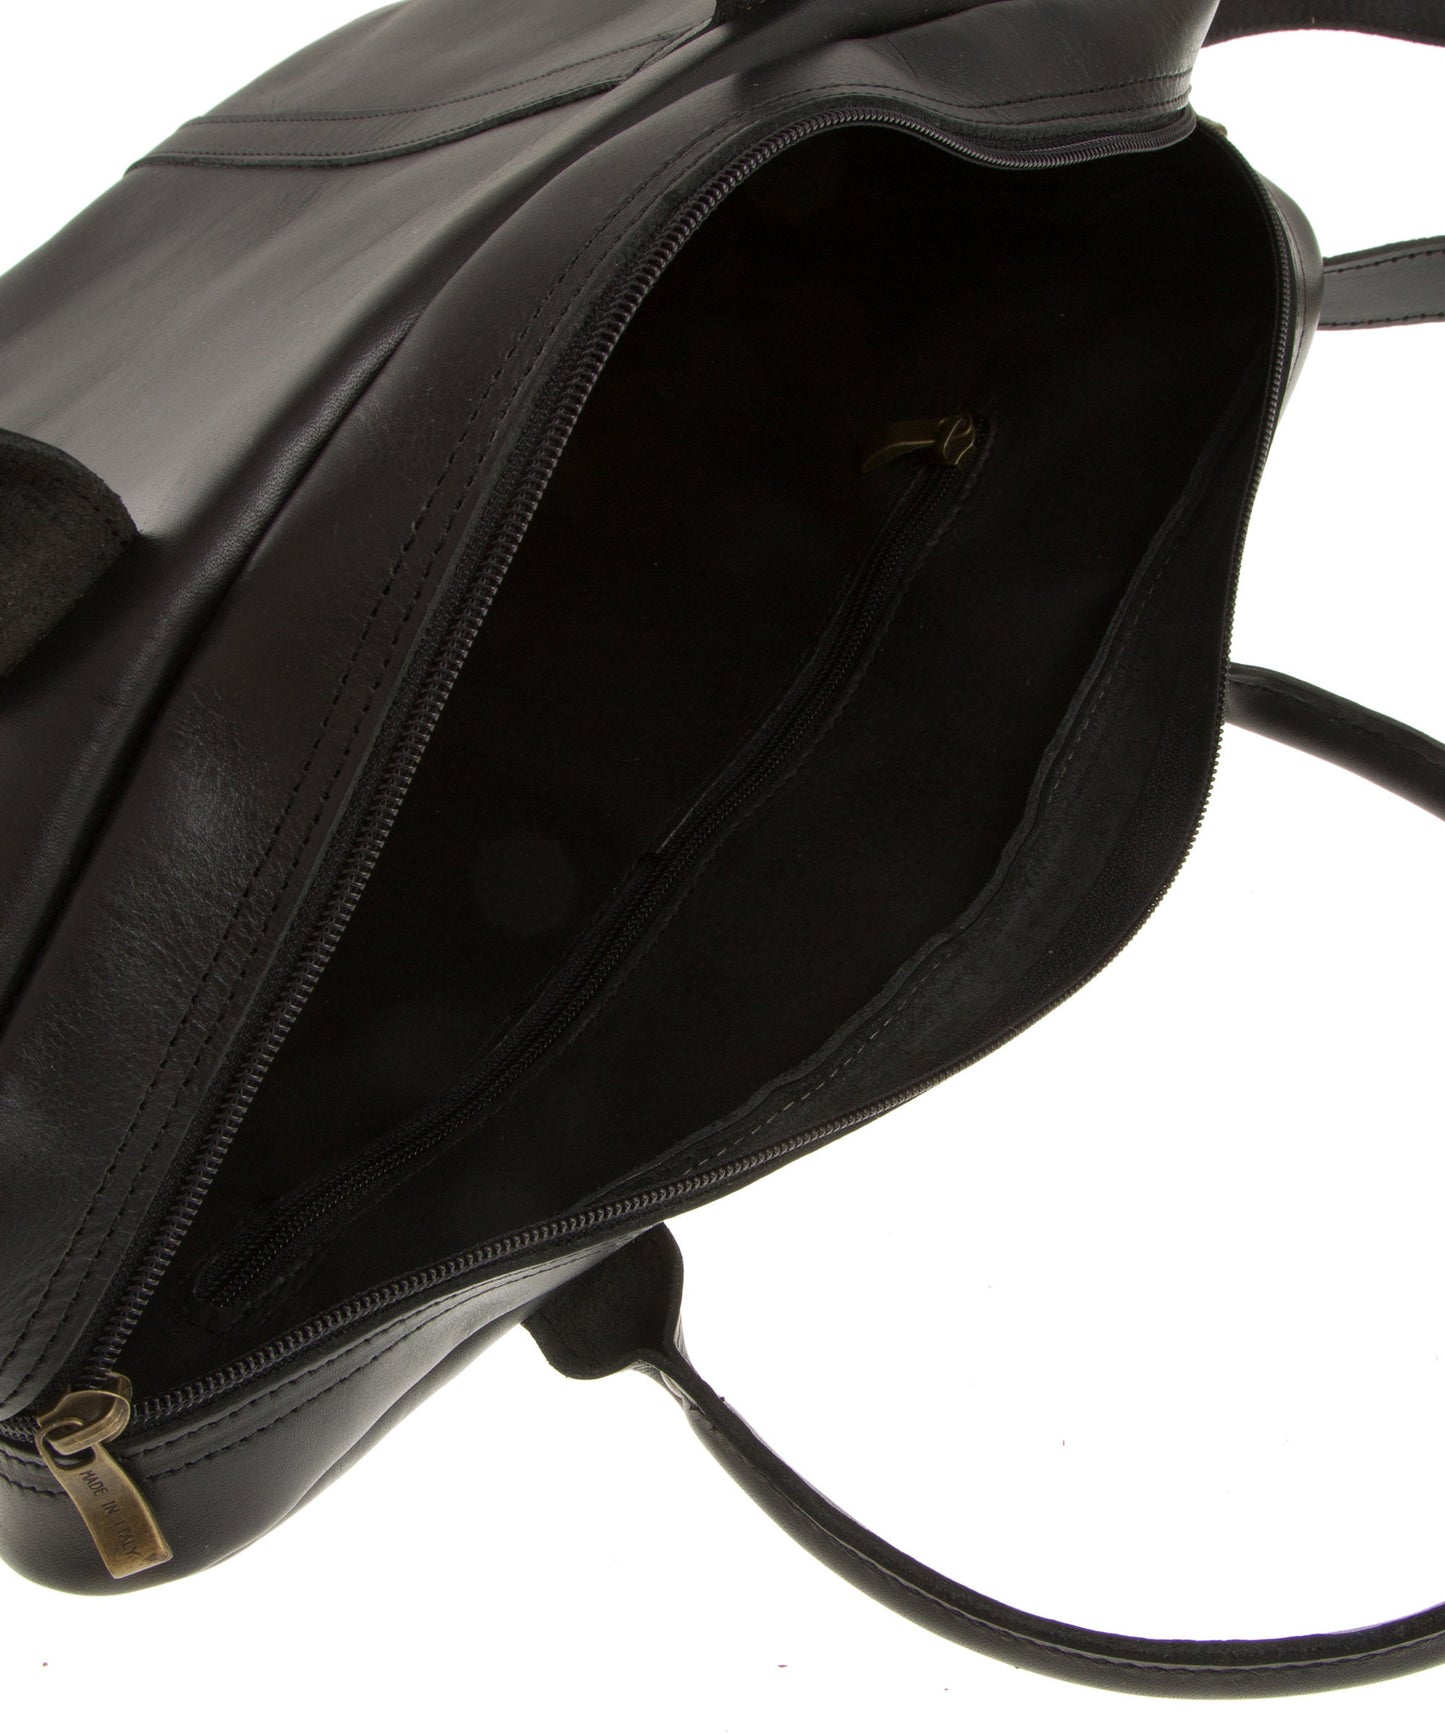 Leather laptop bag men, Extra large leather briefcase, Full grain leather laptop case, 17 inch laptop bag